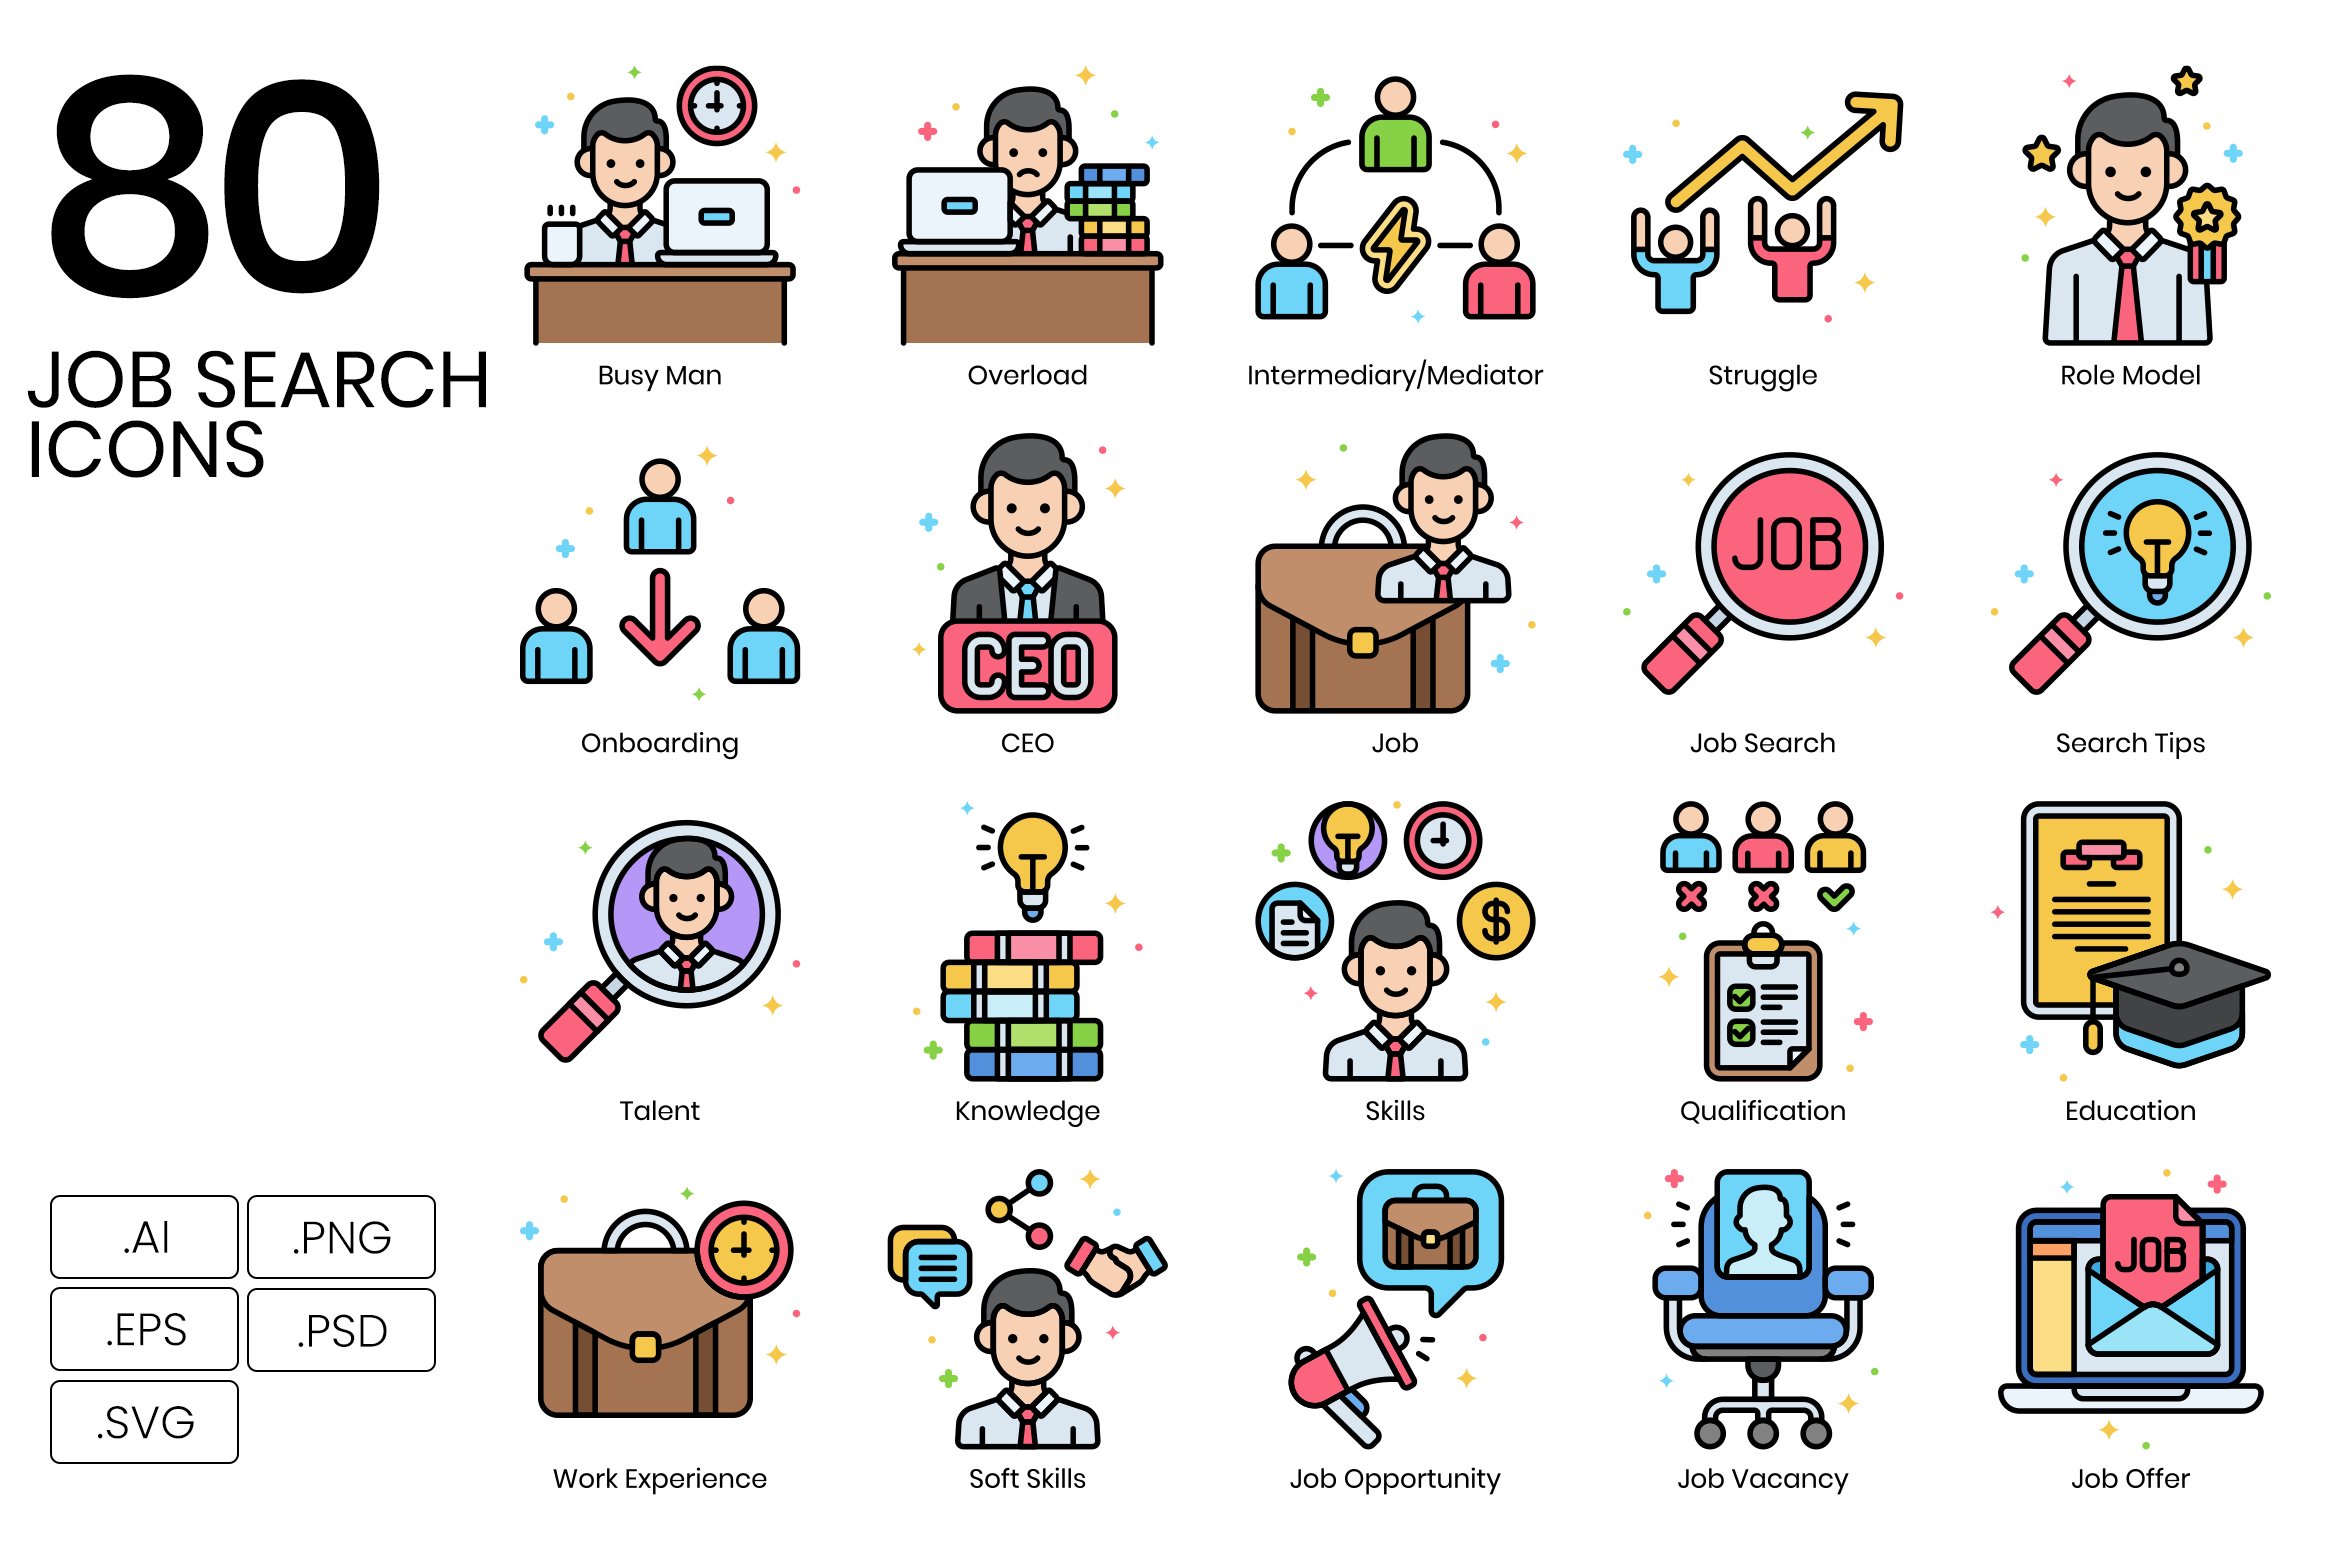 80 Job Search Icons | Vivid cover image.